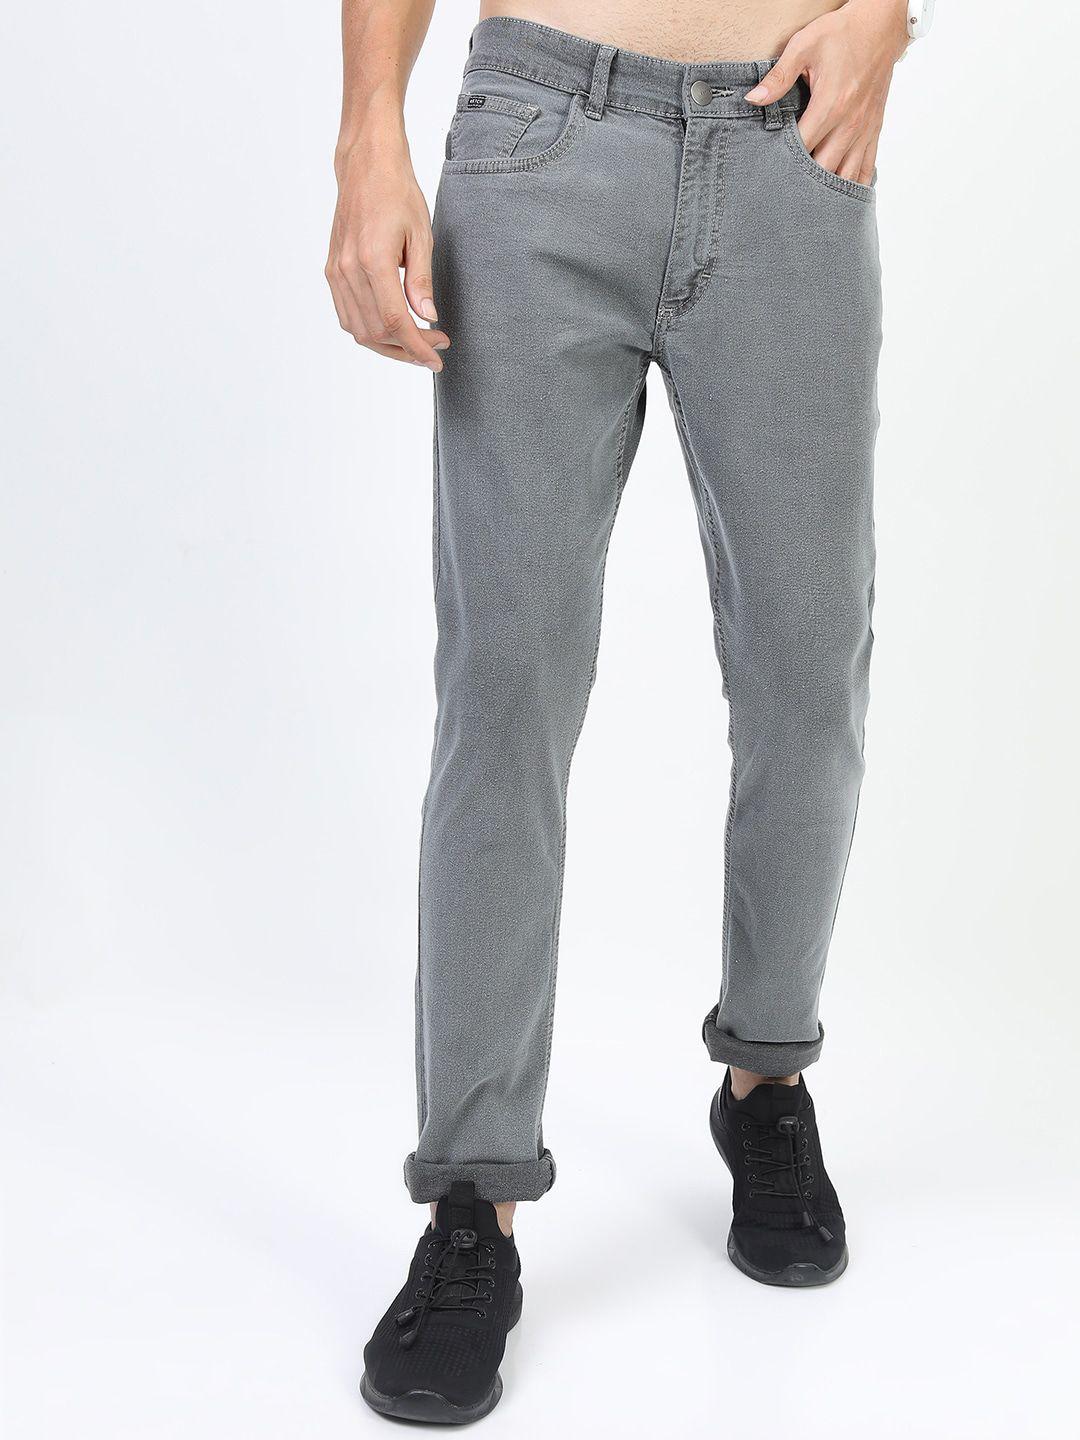 ketch men grey slim fit clean look stretchable jeans